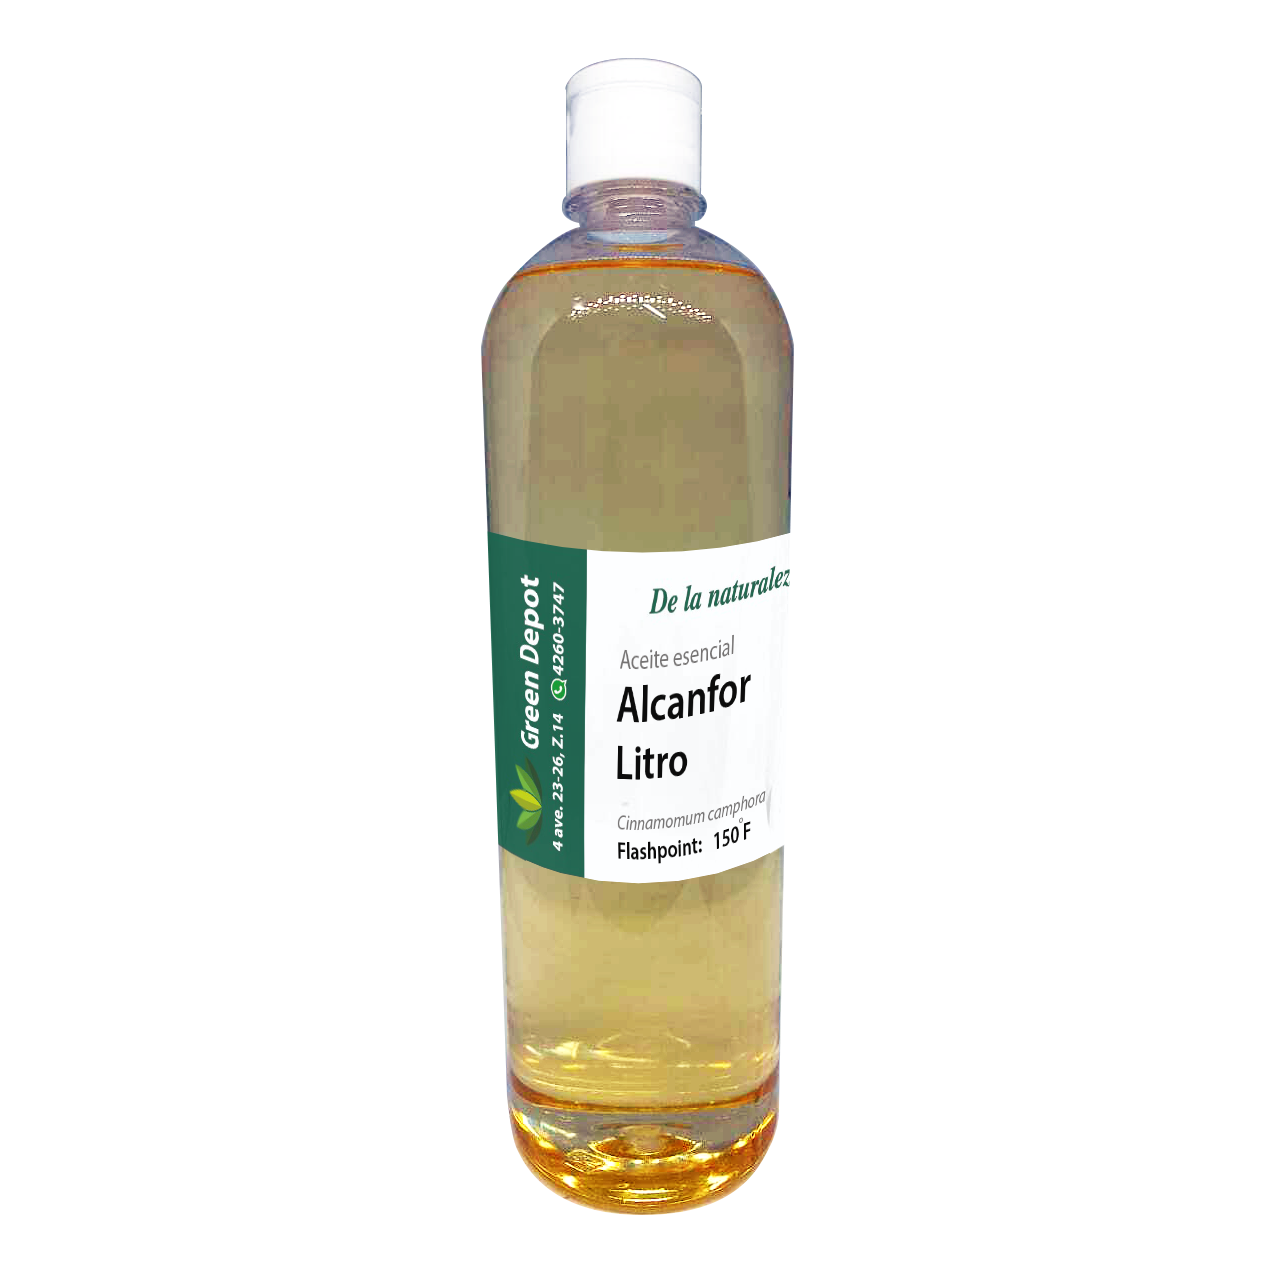 Alcanfor - Aceite Esencial